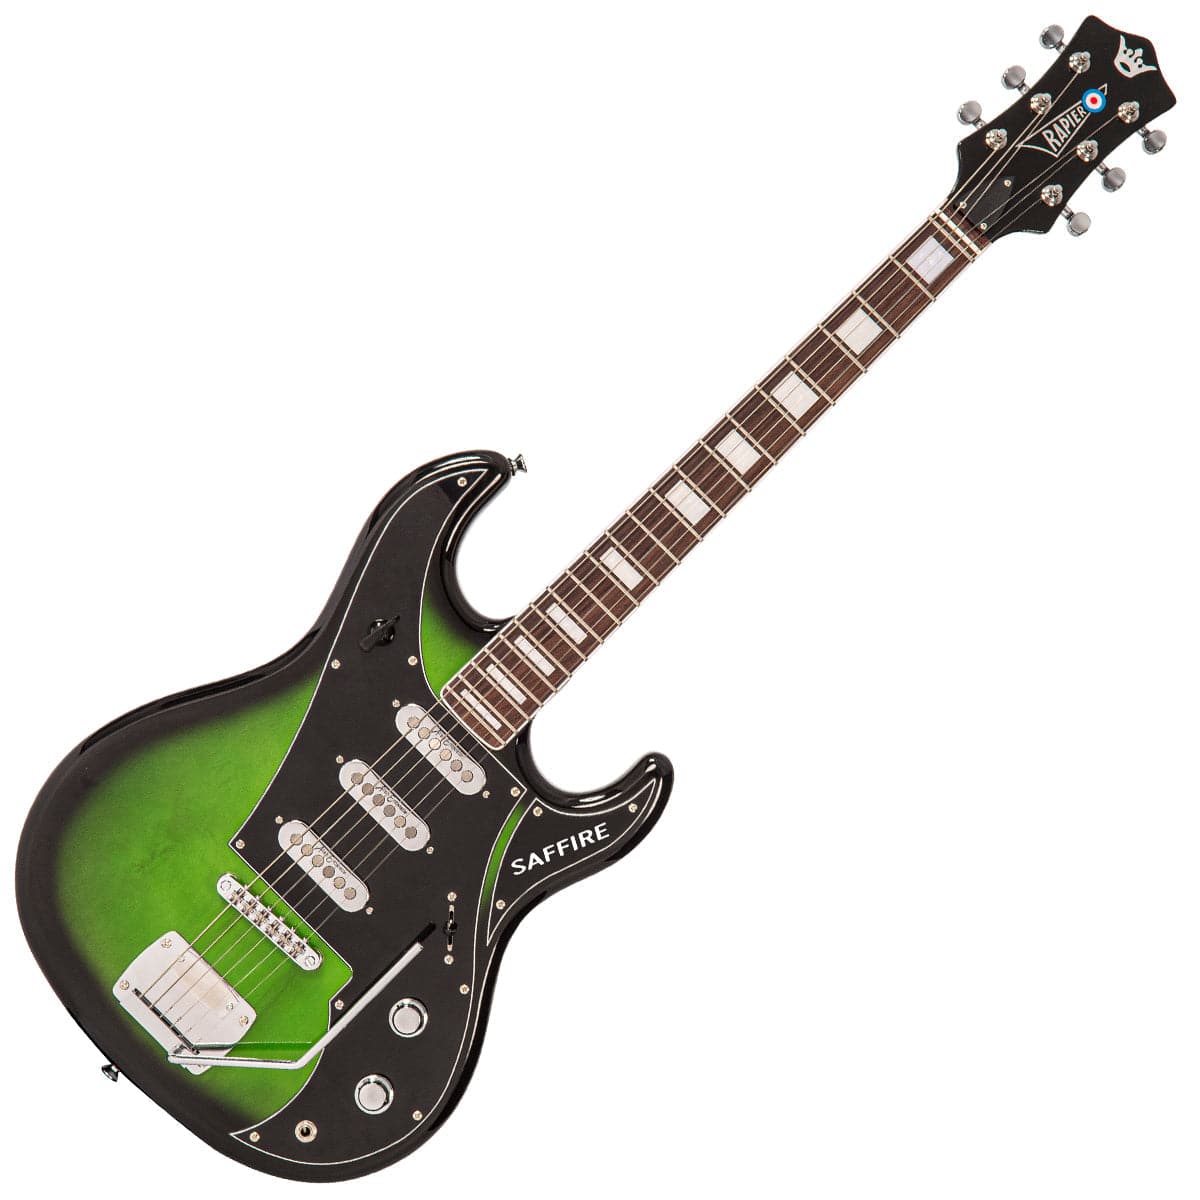 Rapier Saffire Electric Guitar ~ Greenburst